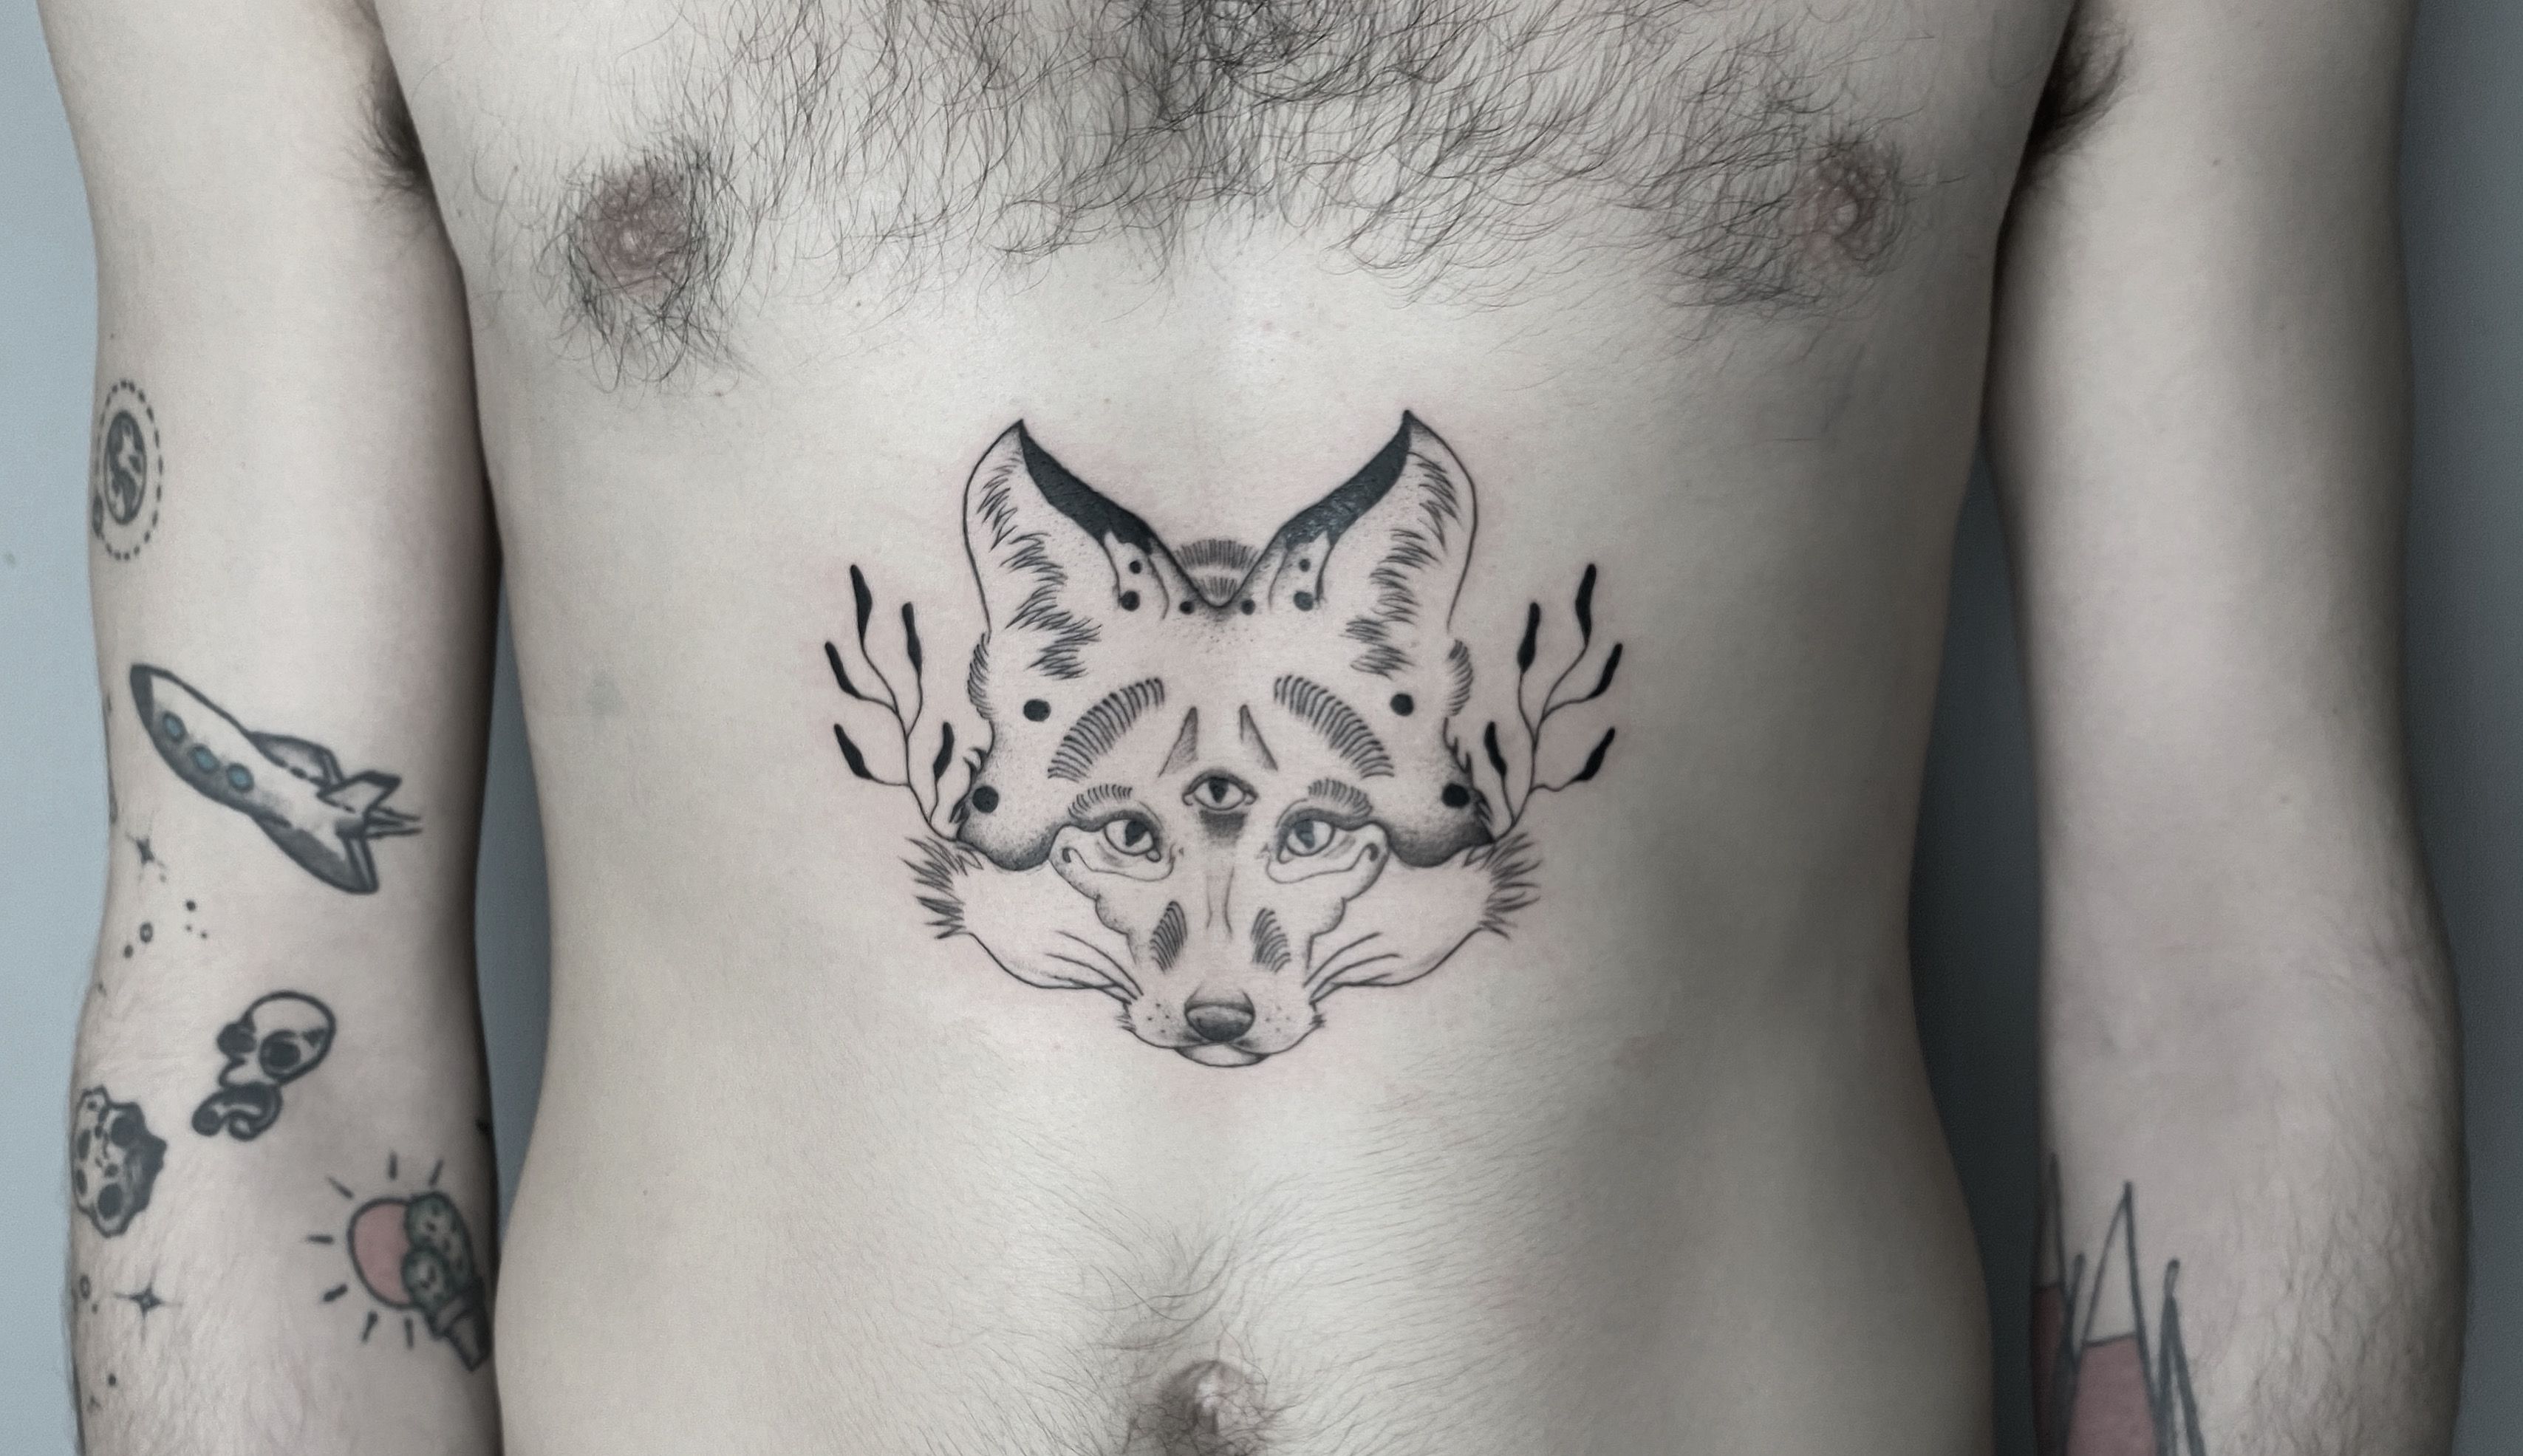 Triangle Wolf Temporary Tattoos For Men Women Watercolor Spray Coyote Tattoo  Sticker Waterproof Drawing Fake Tatoo Body Art Hand  Temporary Tattoos   AliExpress